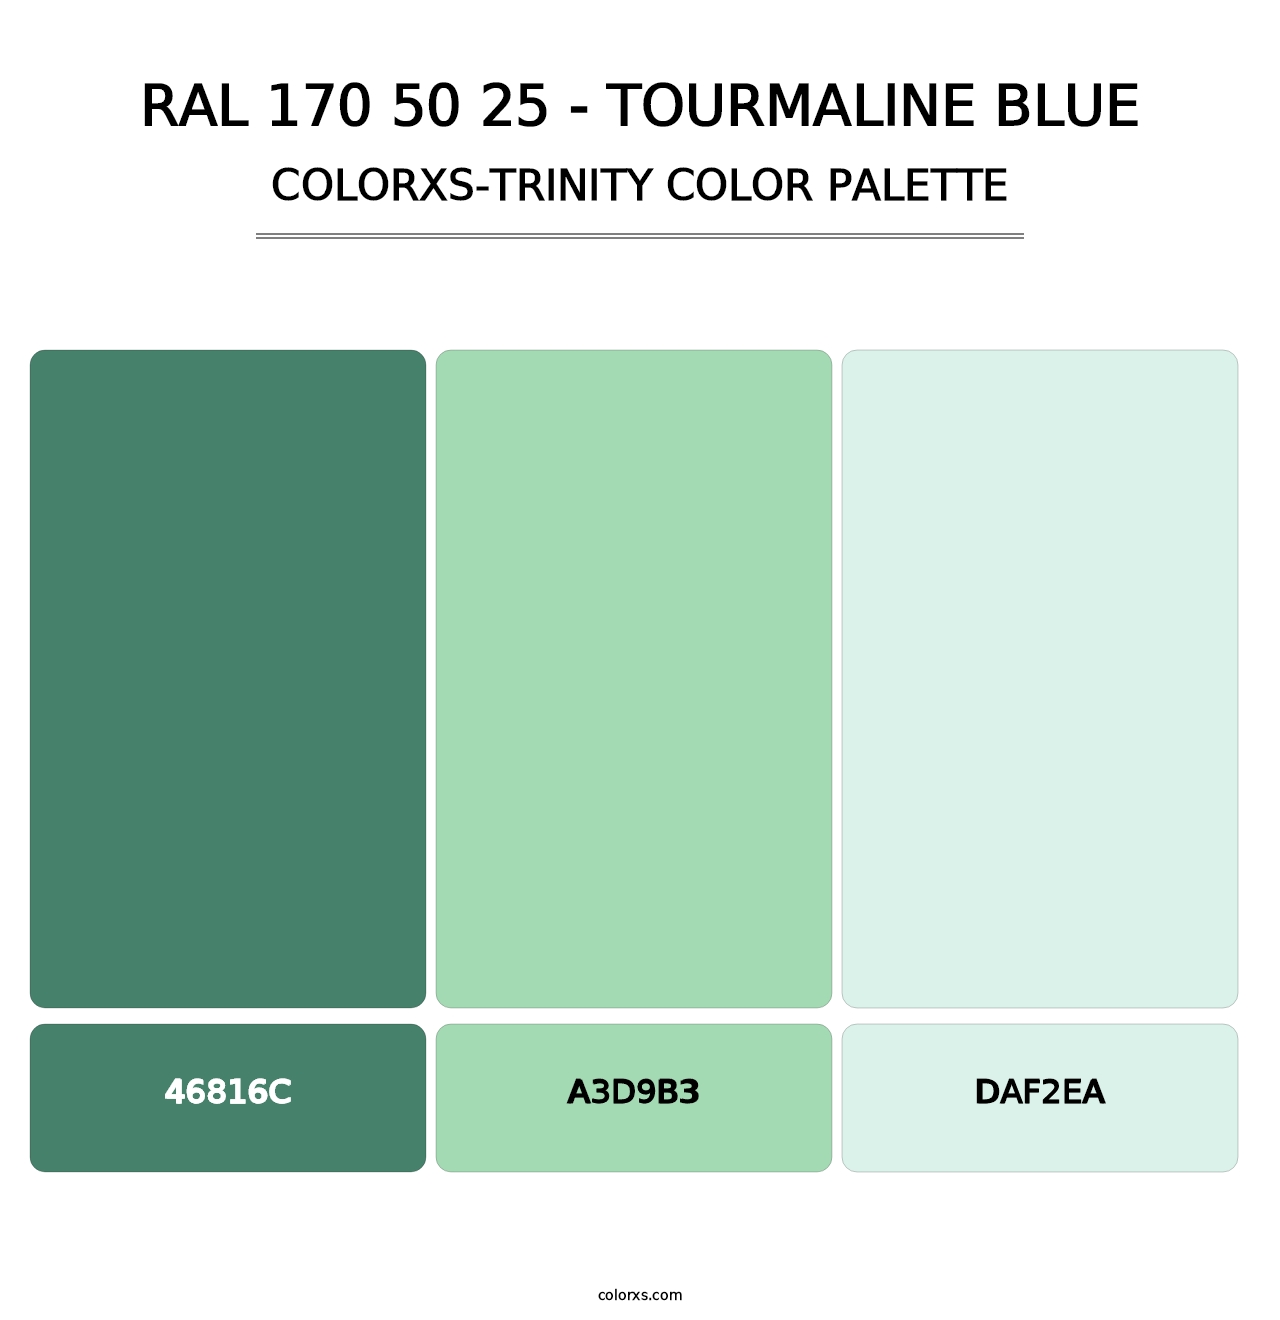 RAL 170 50 25 - Tourmaline Blue - Colorxs Trinity Palette